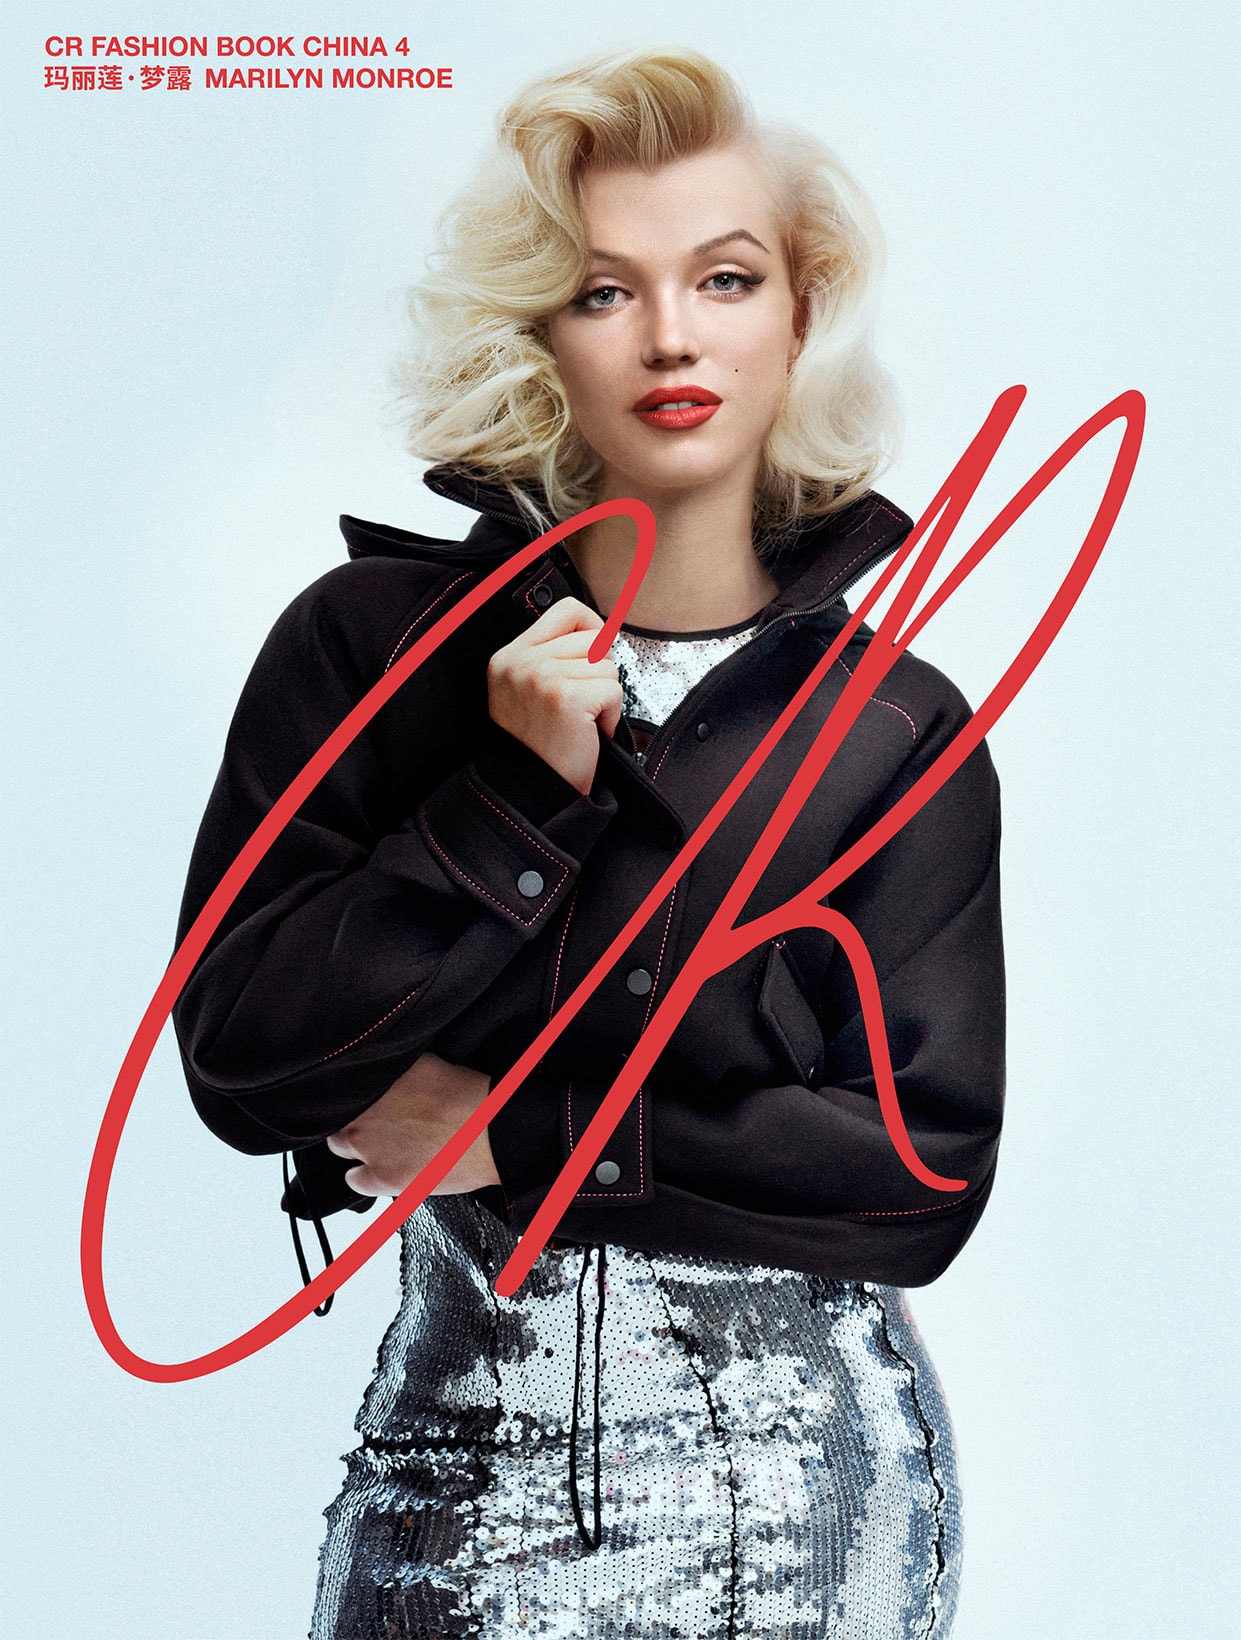 Marilyn Monroe CR Fashion Book China Digital Rendering Reimagined Cover Balenciaga Miu Miu Auroboros Images NFT